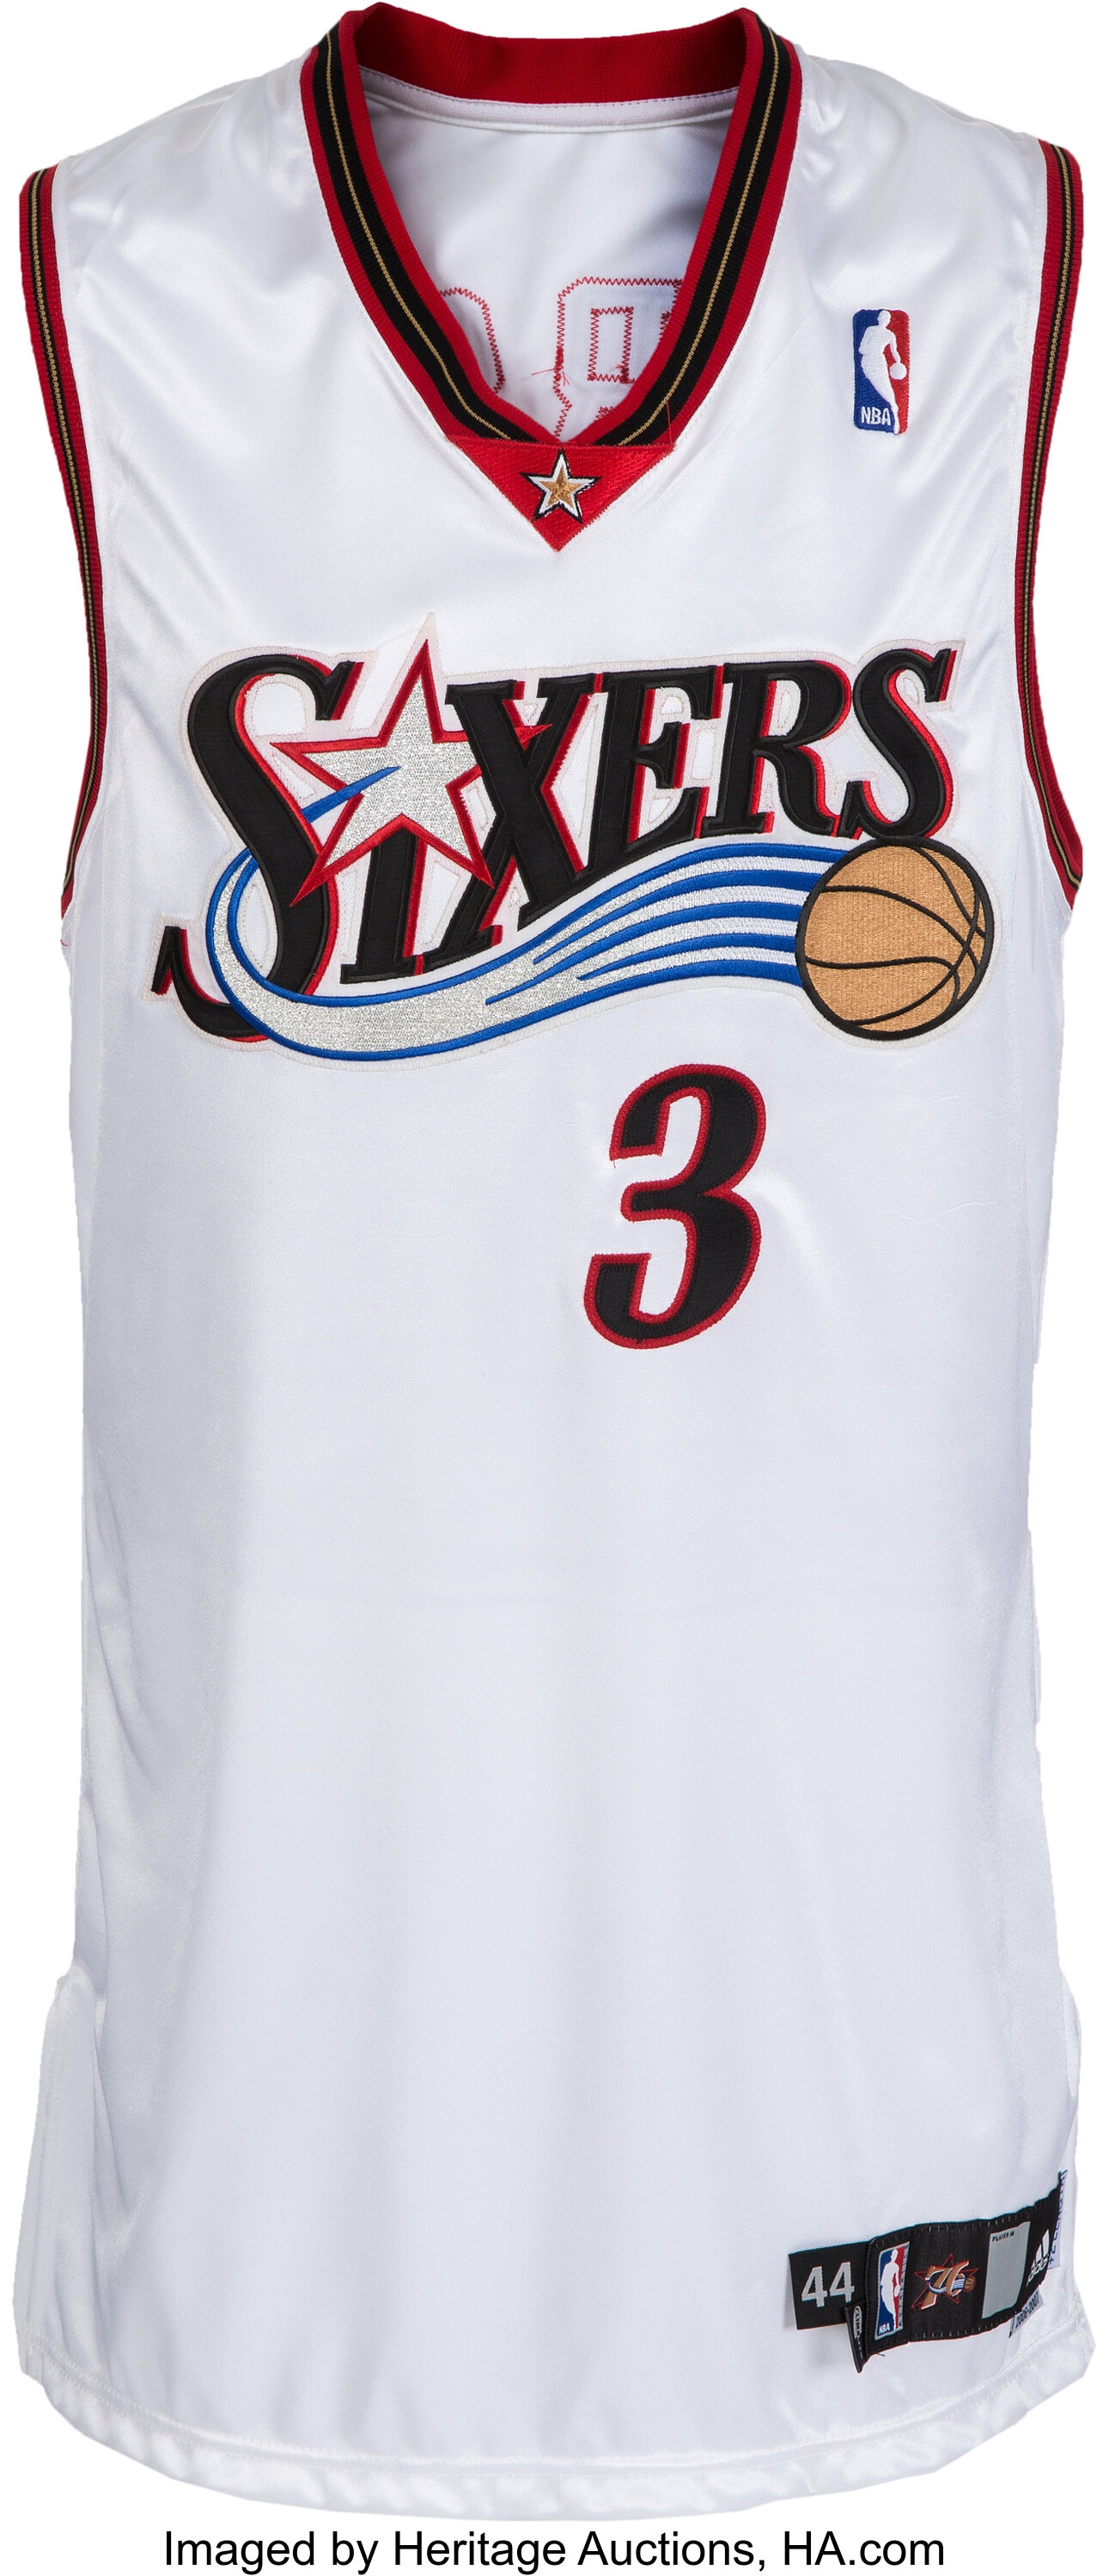 2006-07 Philadelphia 76ers BlankGame Issued White Jersey 52 DP50609